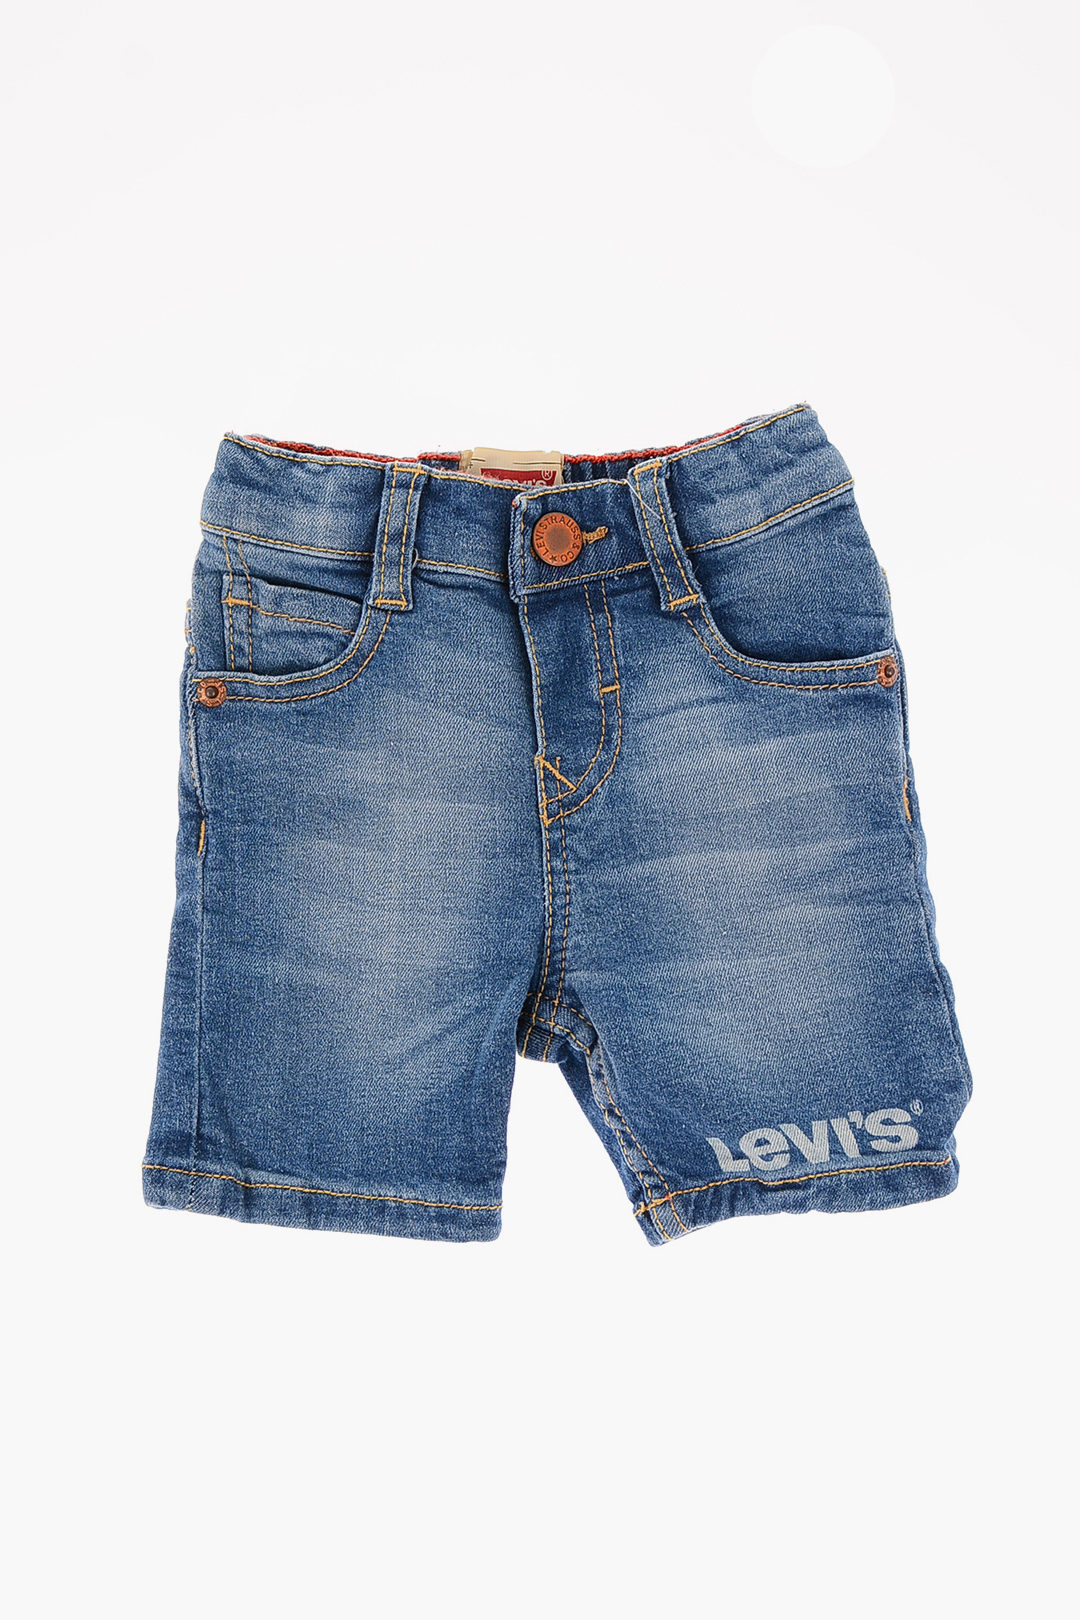 Levi's Kids stretch denim drawstring-waist 511 shorts boys - Glamood Outlet